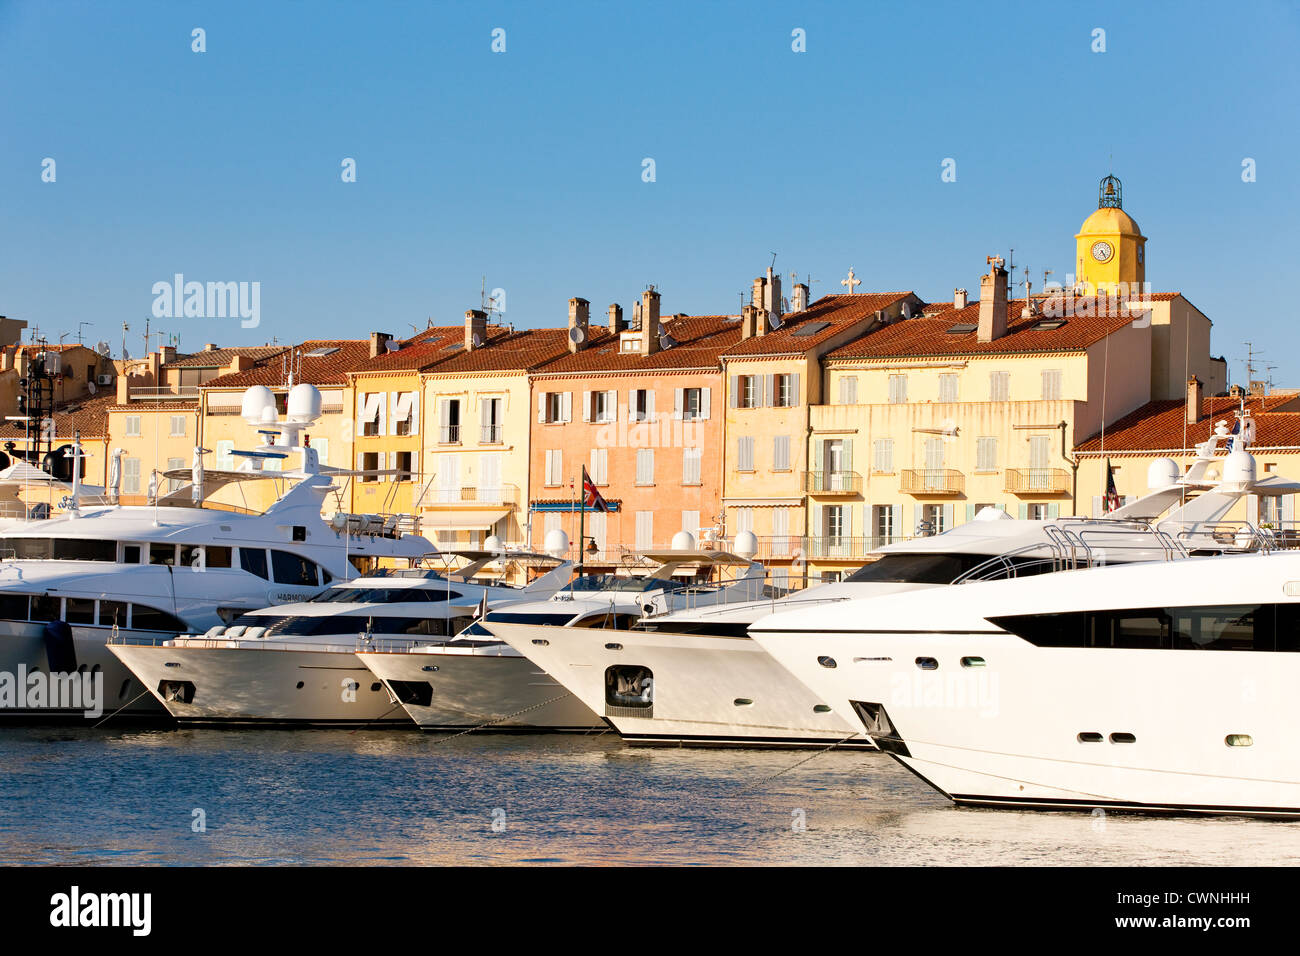 Harbor of Saint Tropez, French Riviera, Cote d' Azur, France Stock Photo